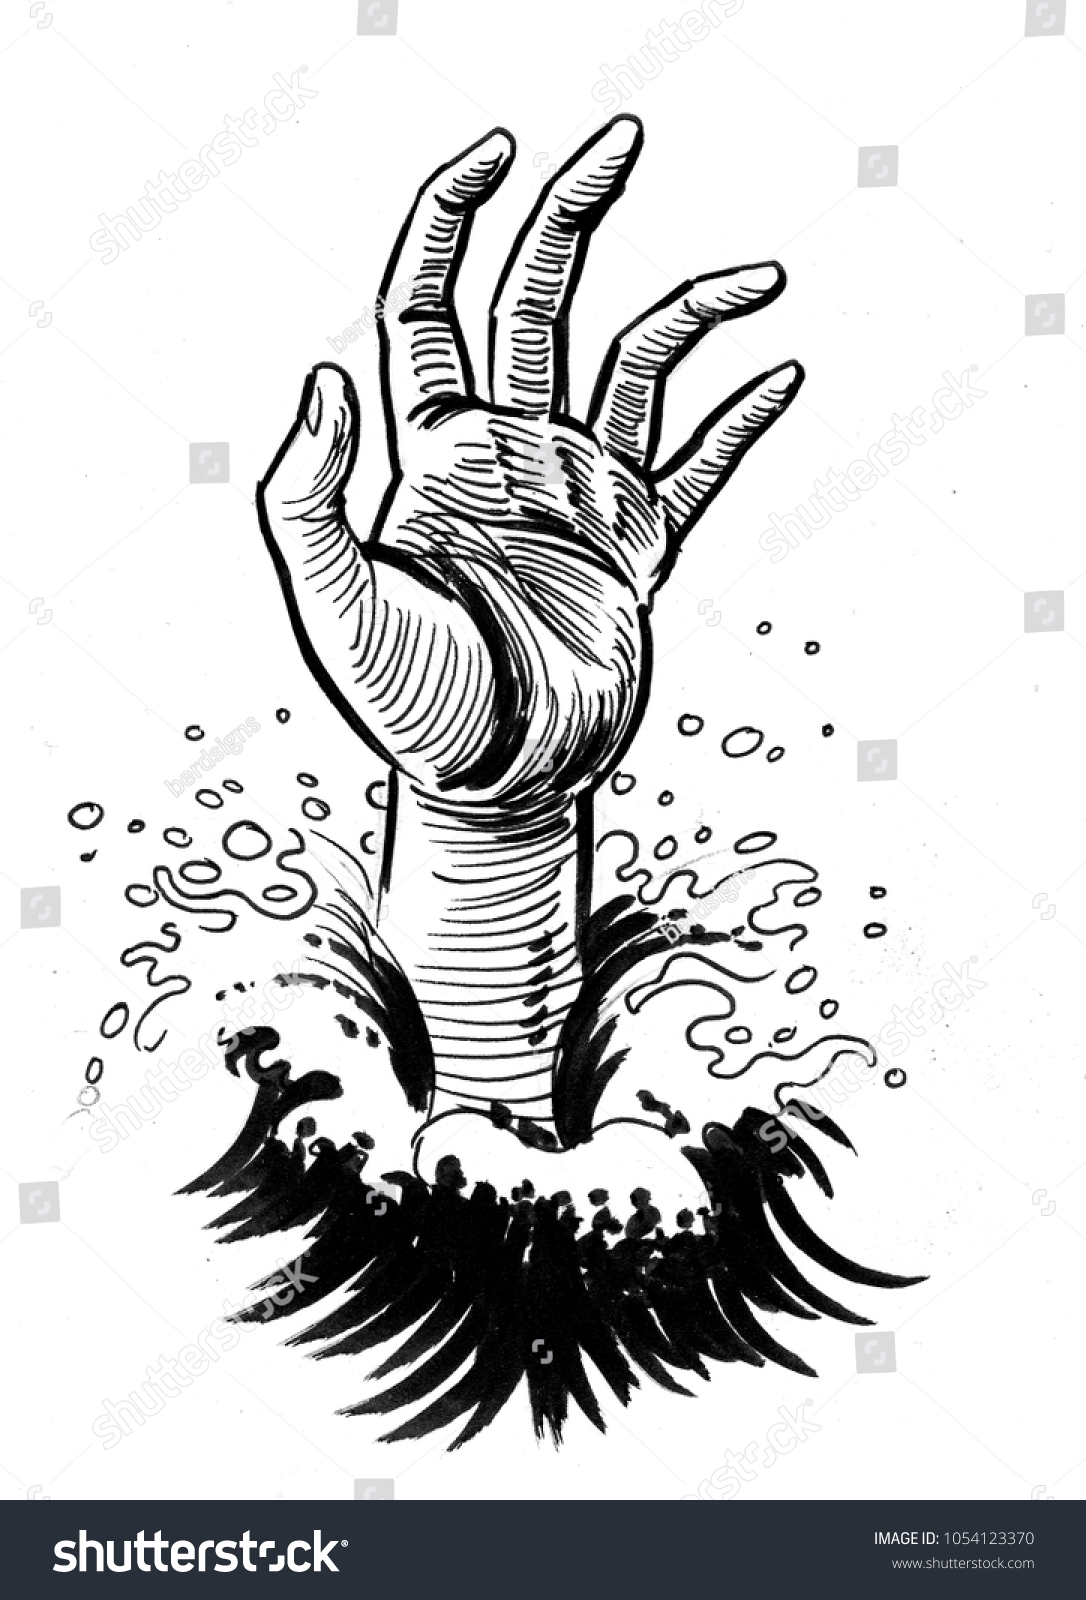 Drowning Hand Ink Black White Illustration Stock Illustration